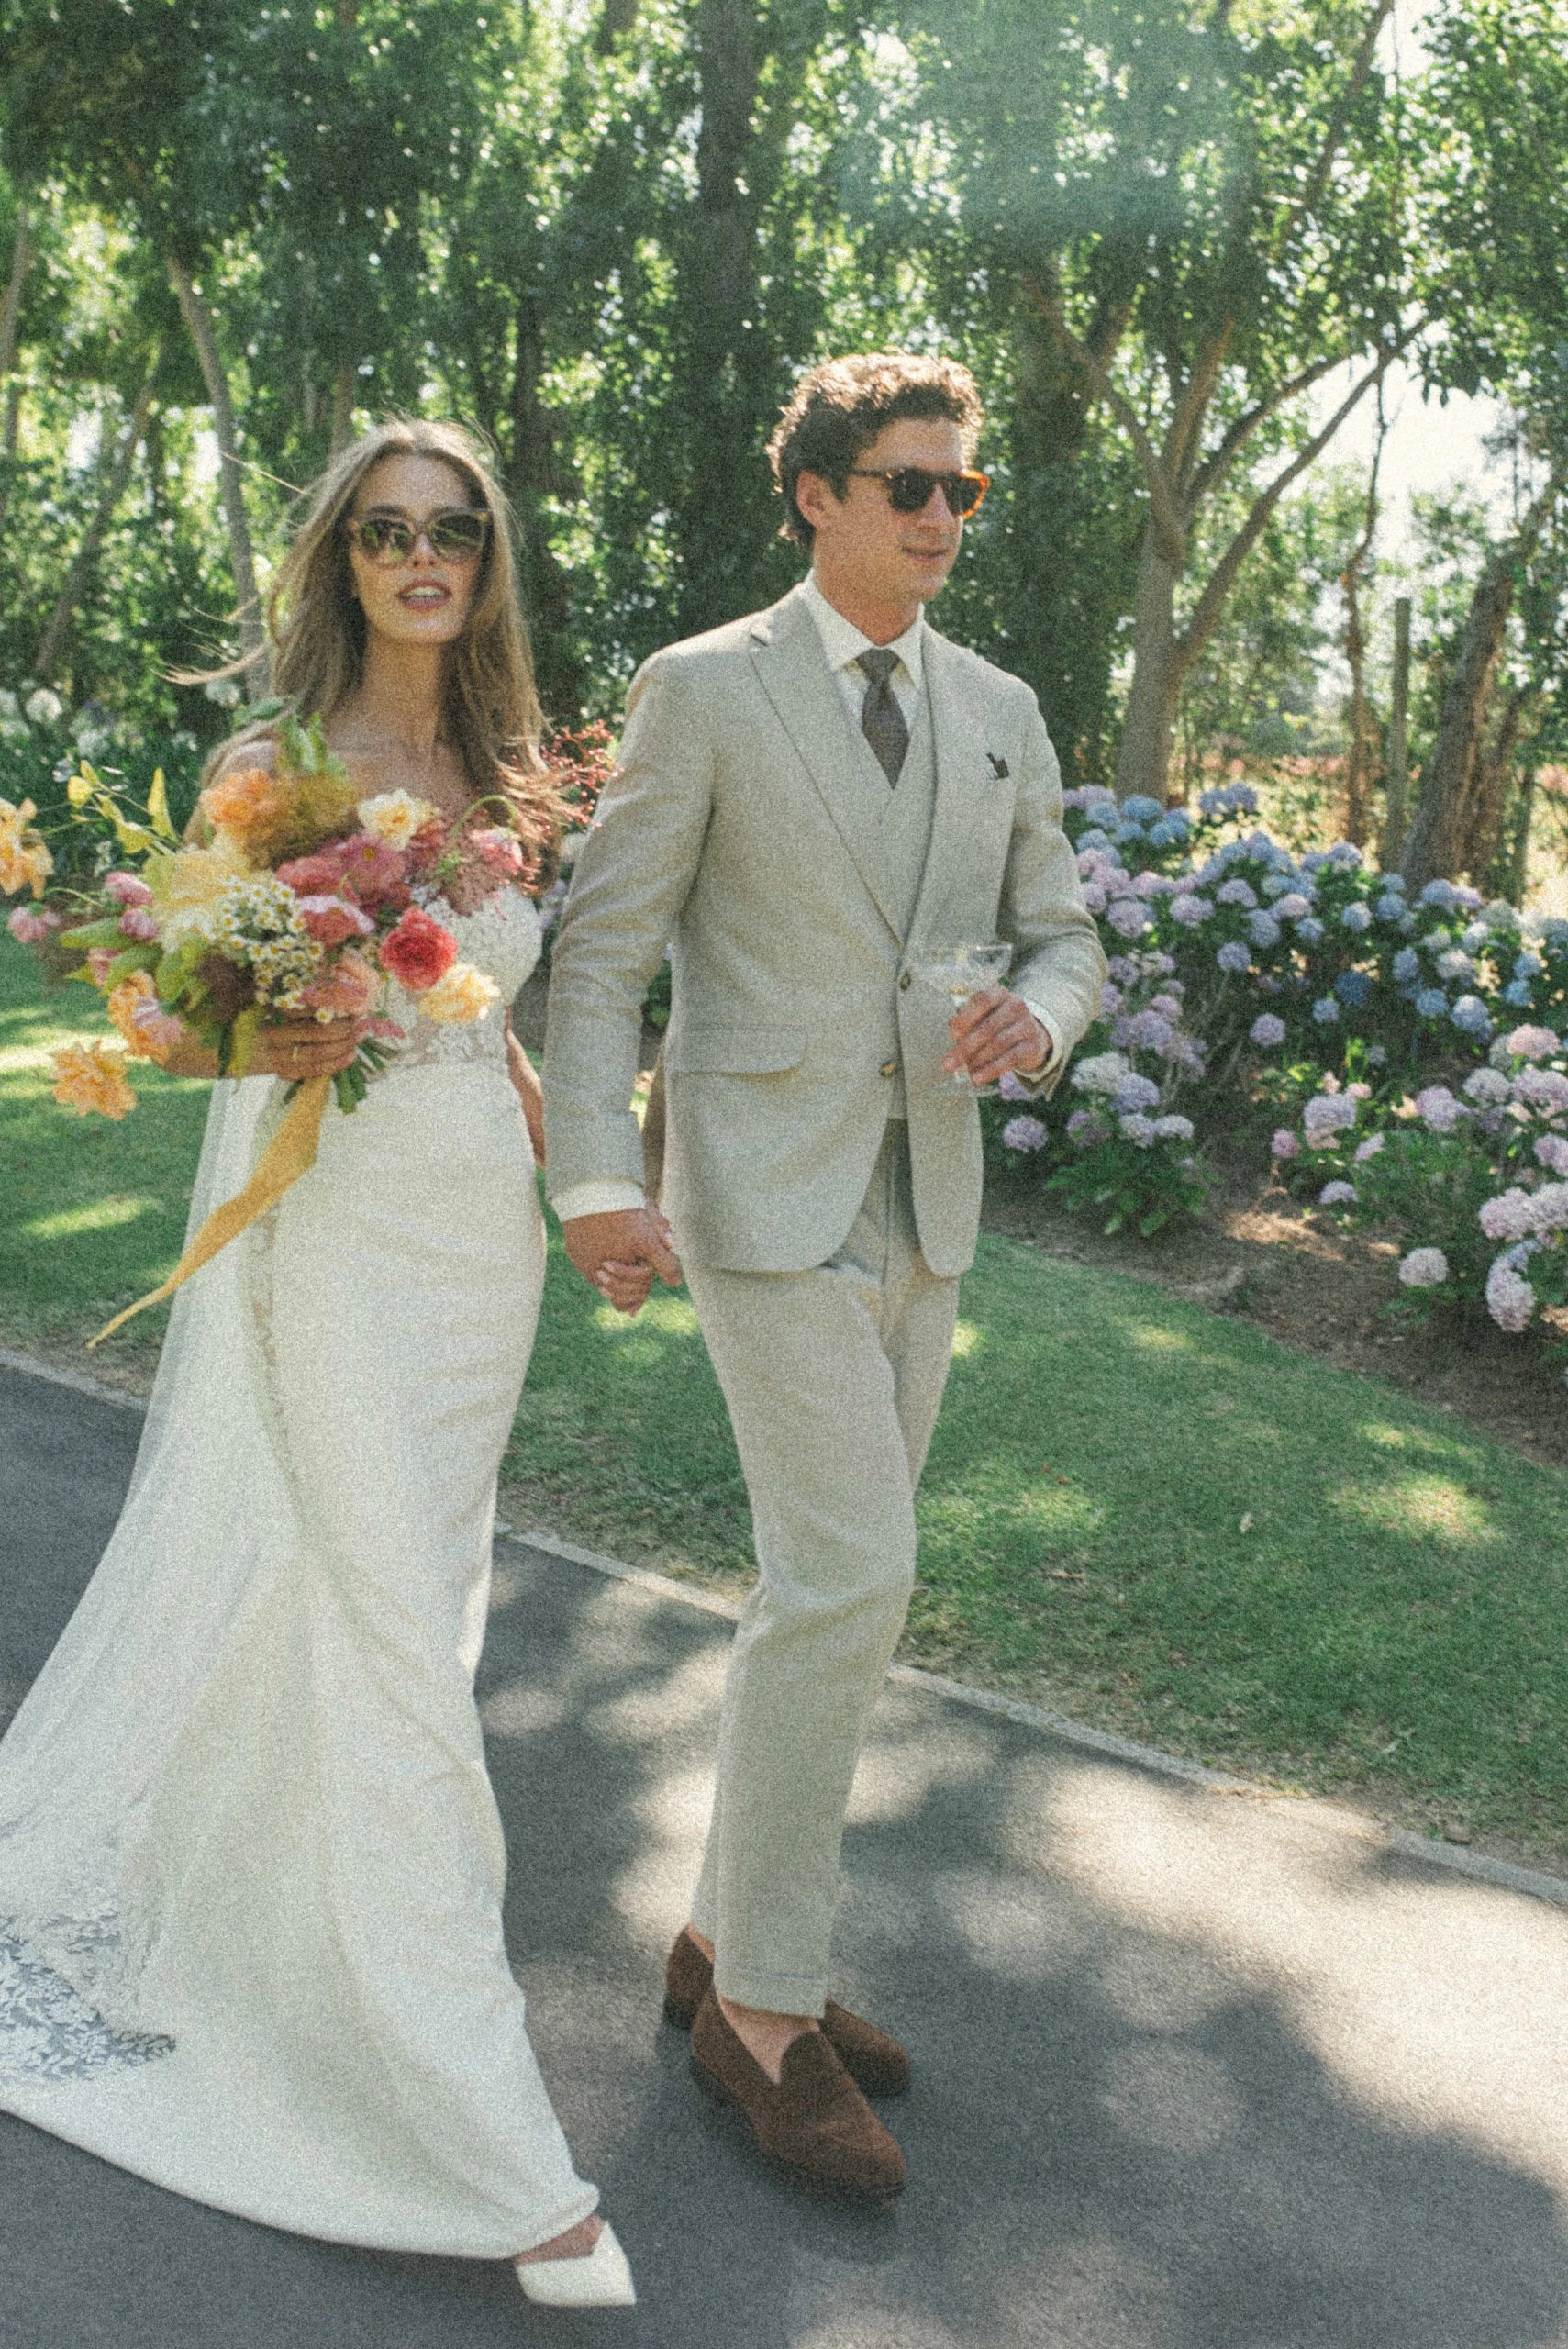 custom made beige wedding suit with Windsor tie knot